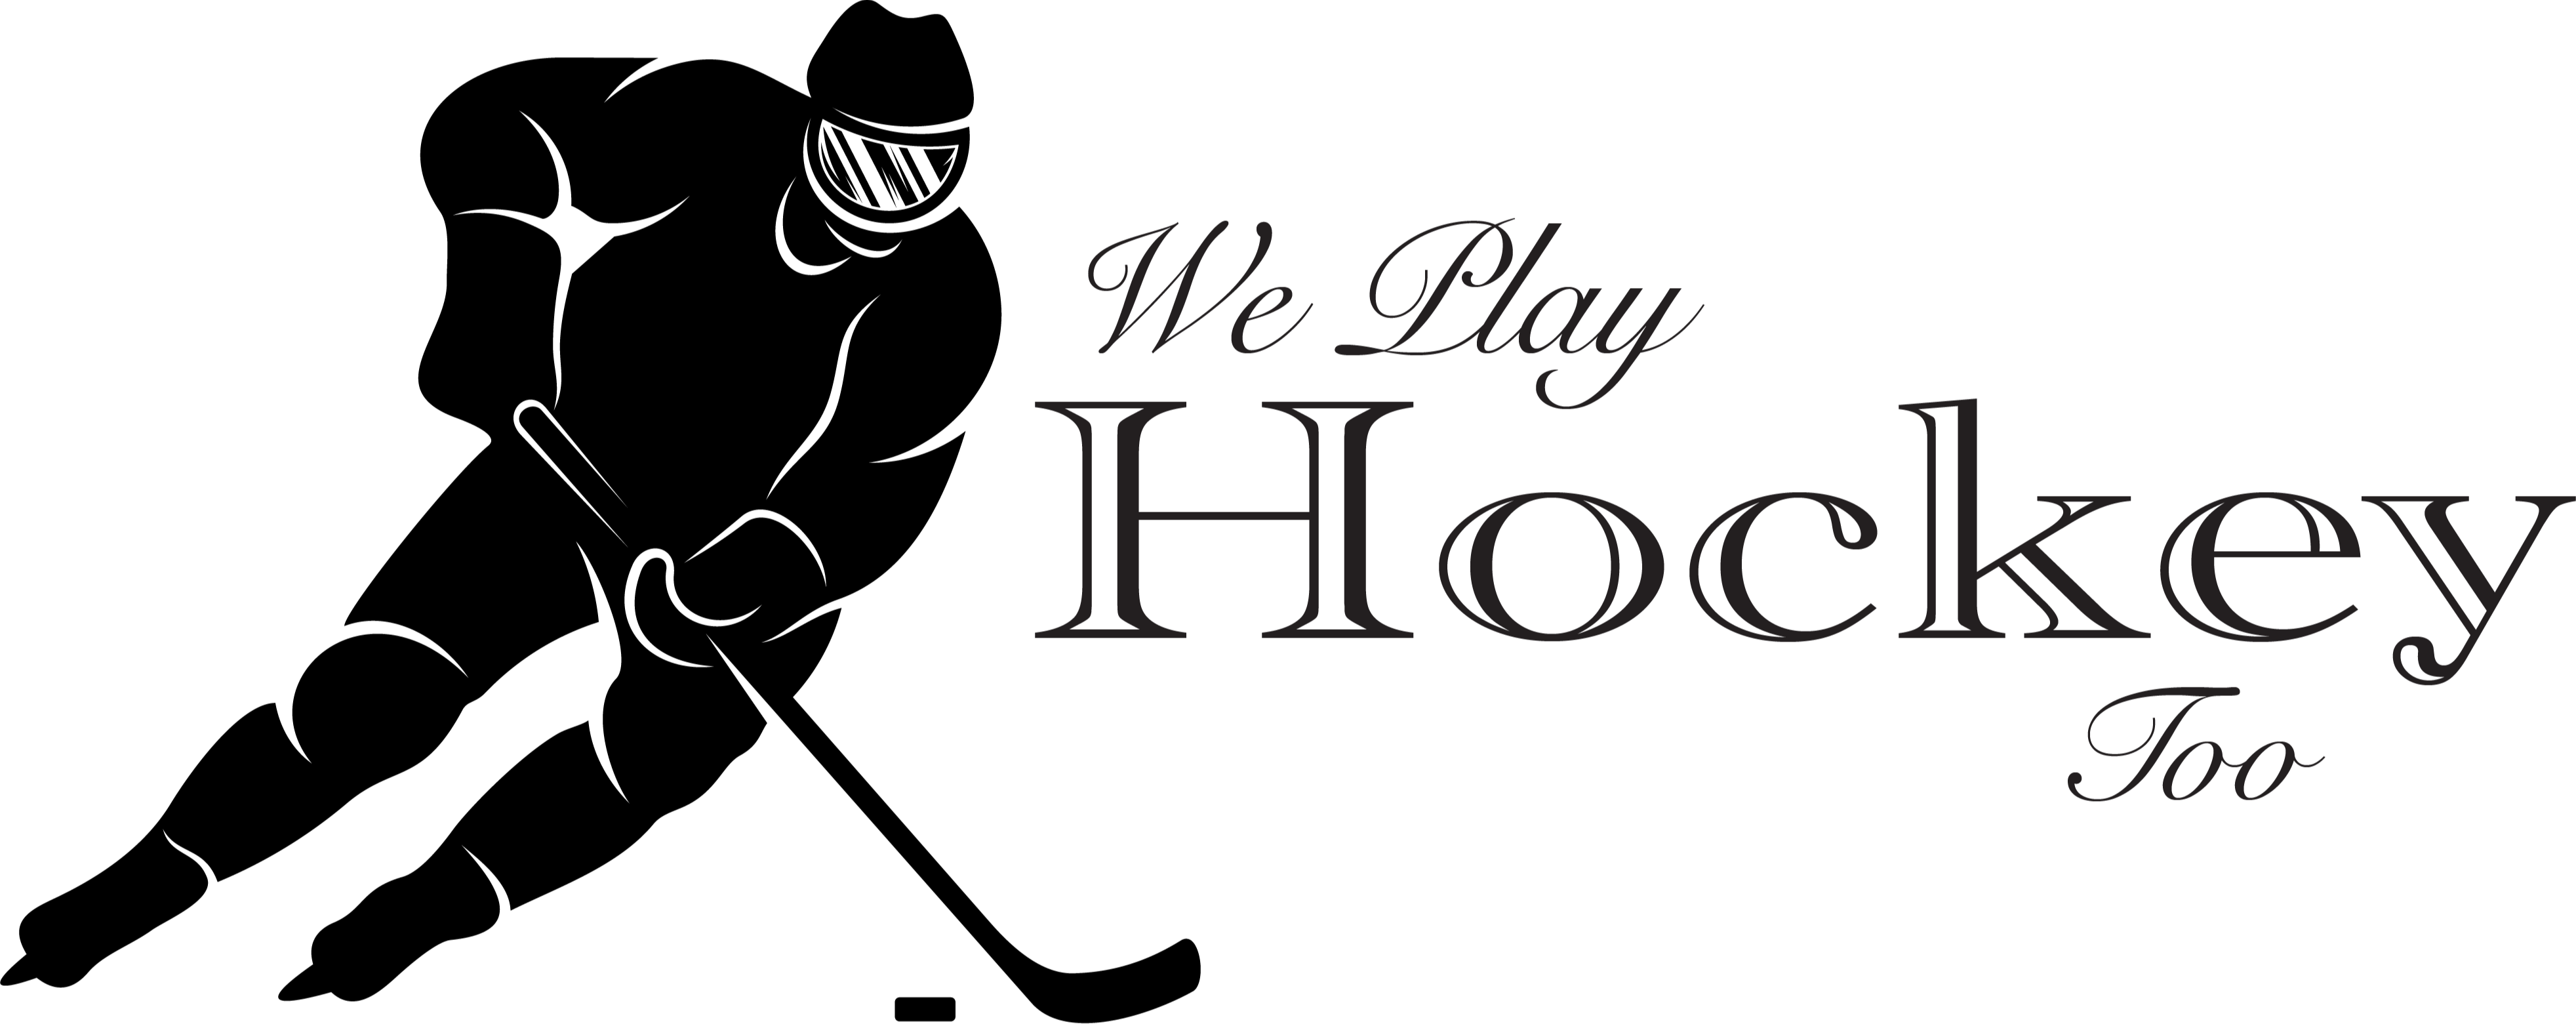 We Play Hockey Too Inc. logo